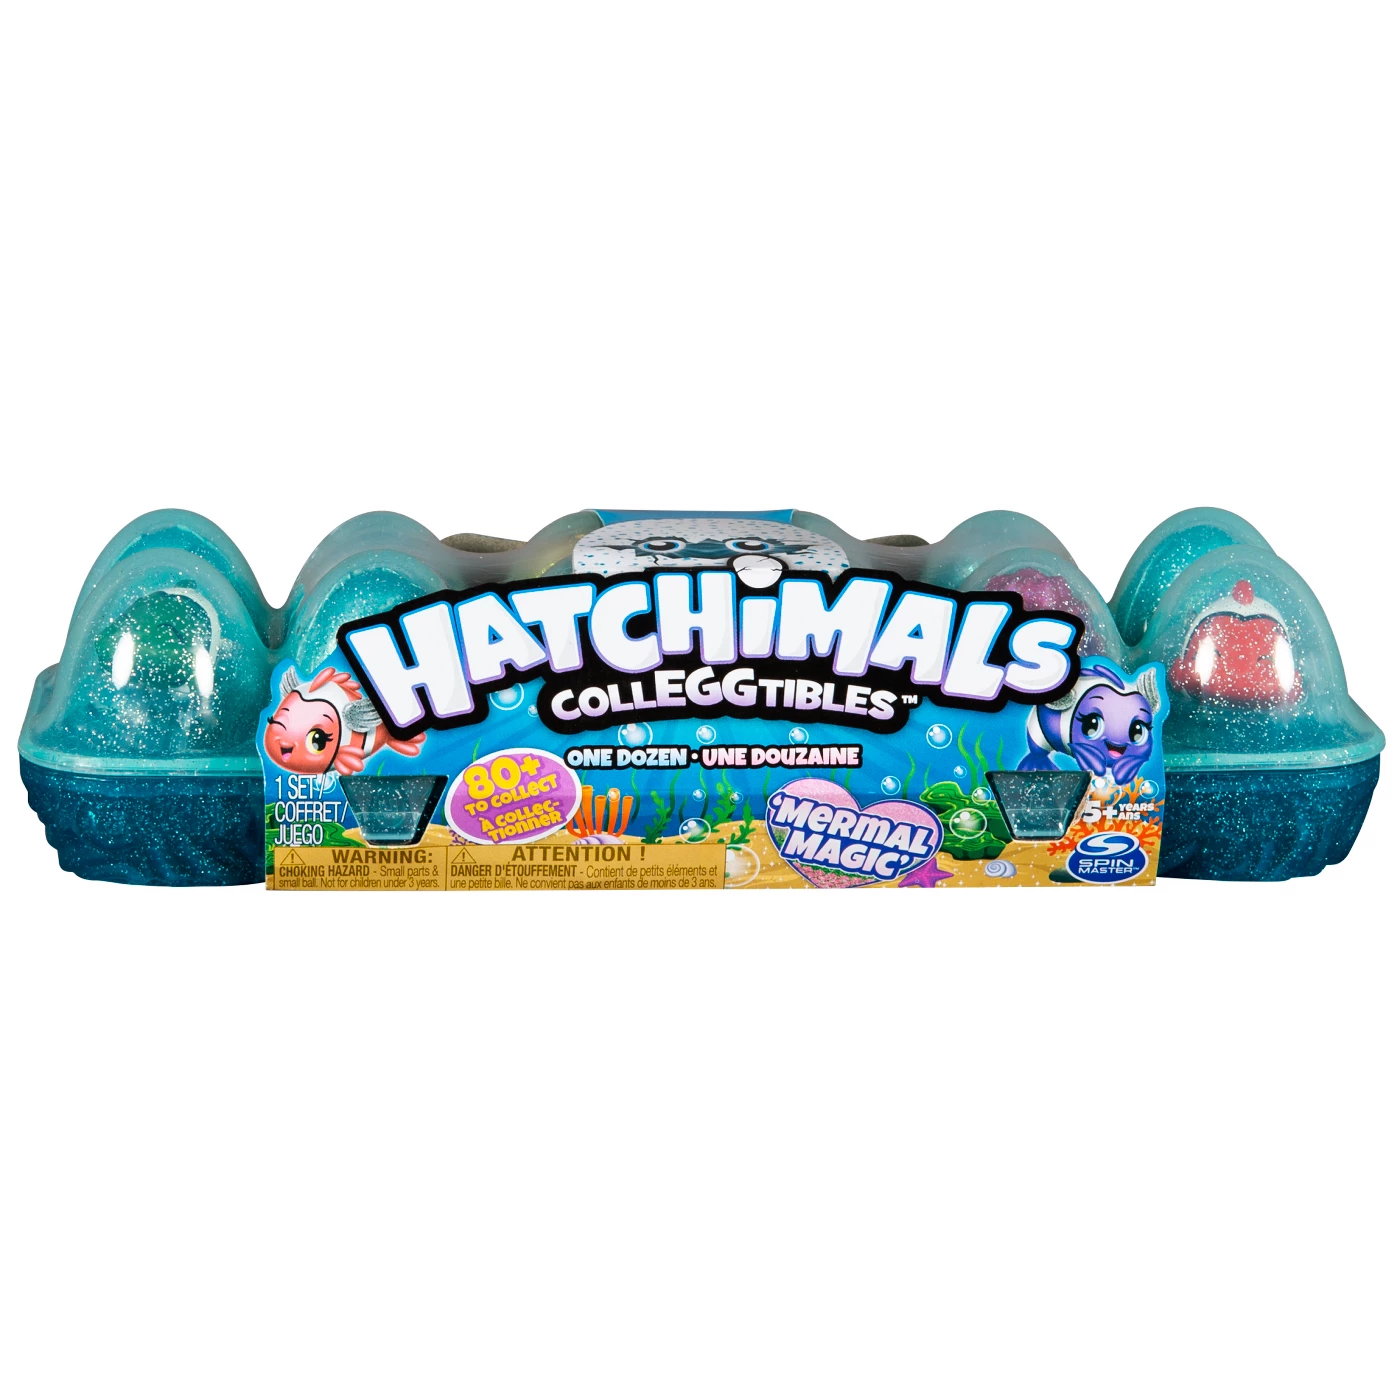 Hatchimals CollEGGtibles Mermal Magic 12pk Egg Carton with Season 5 Hatchimals - image 1 of 6